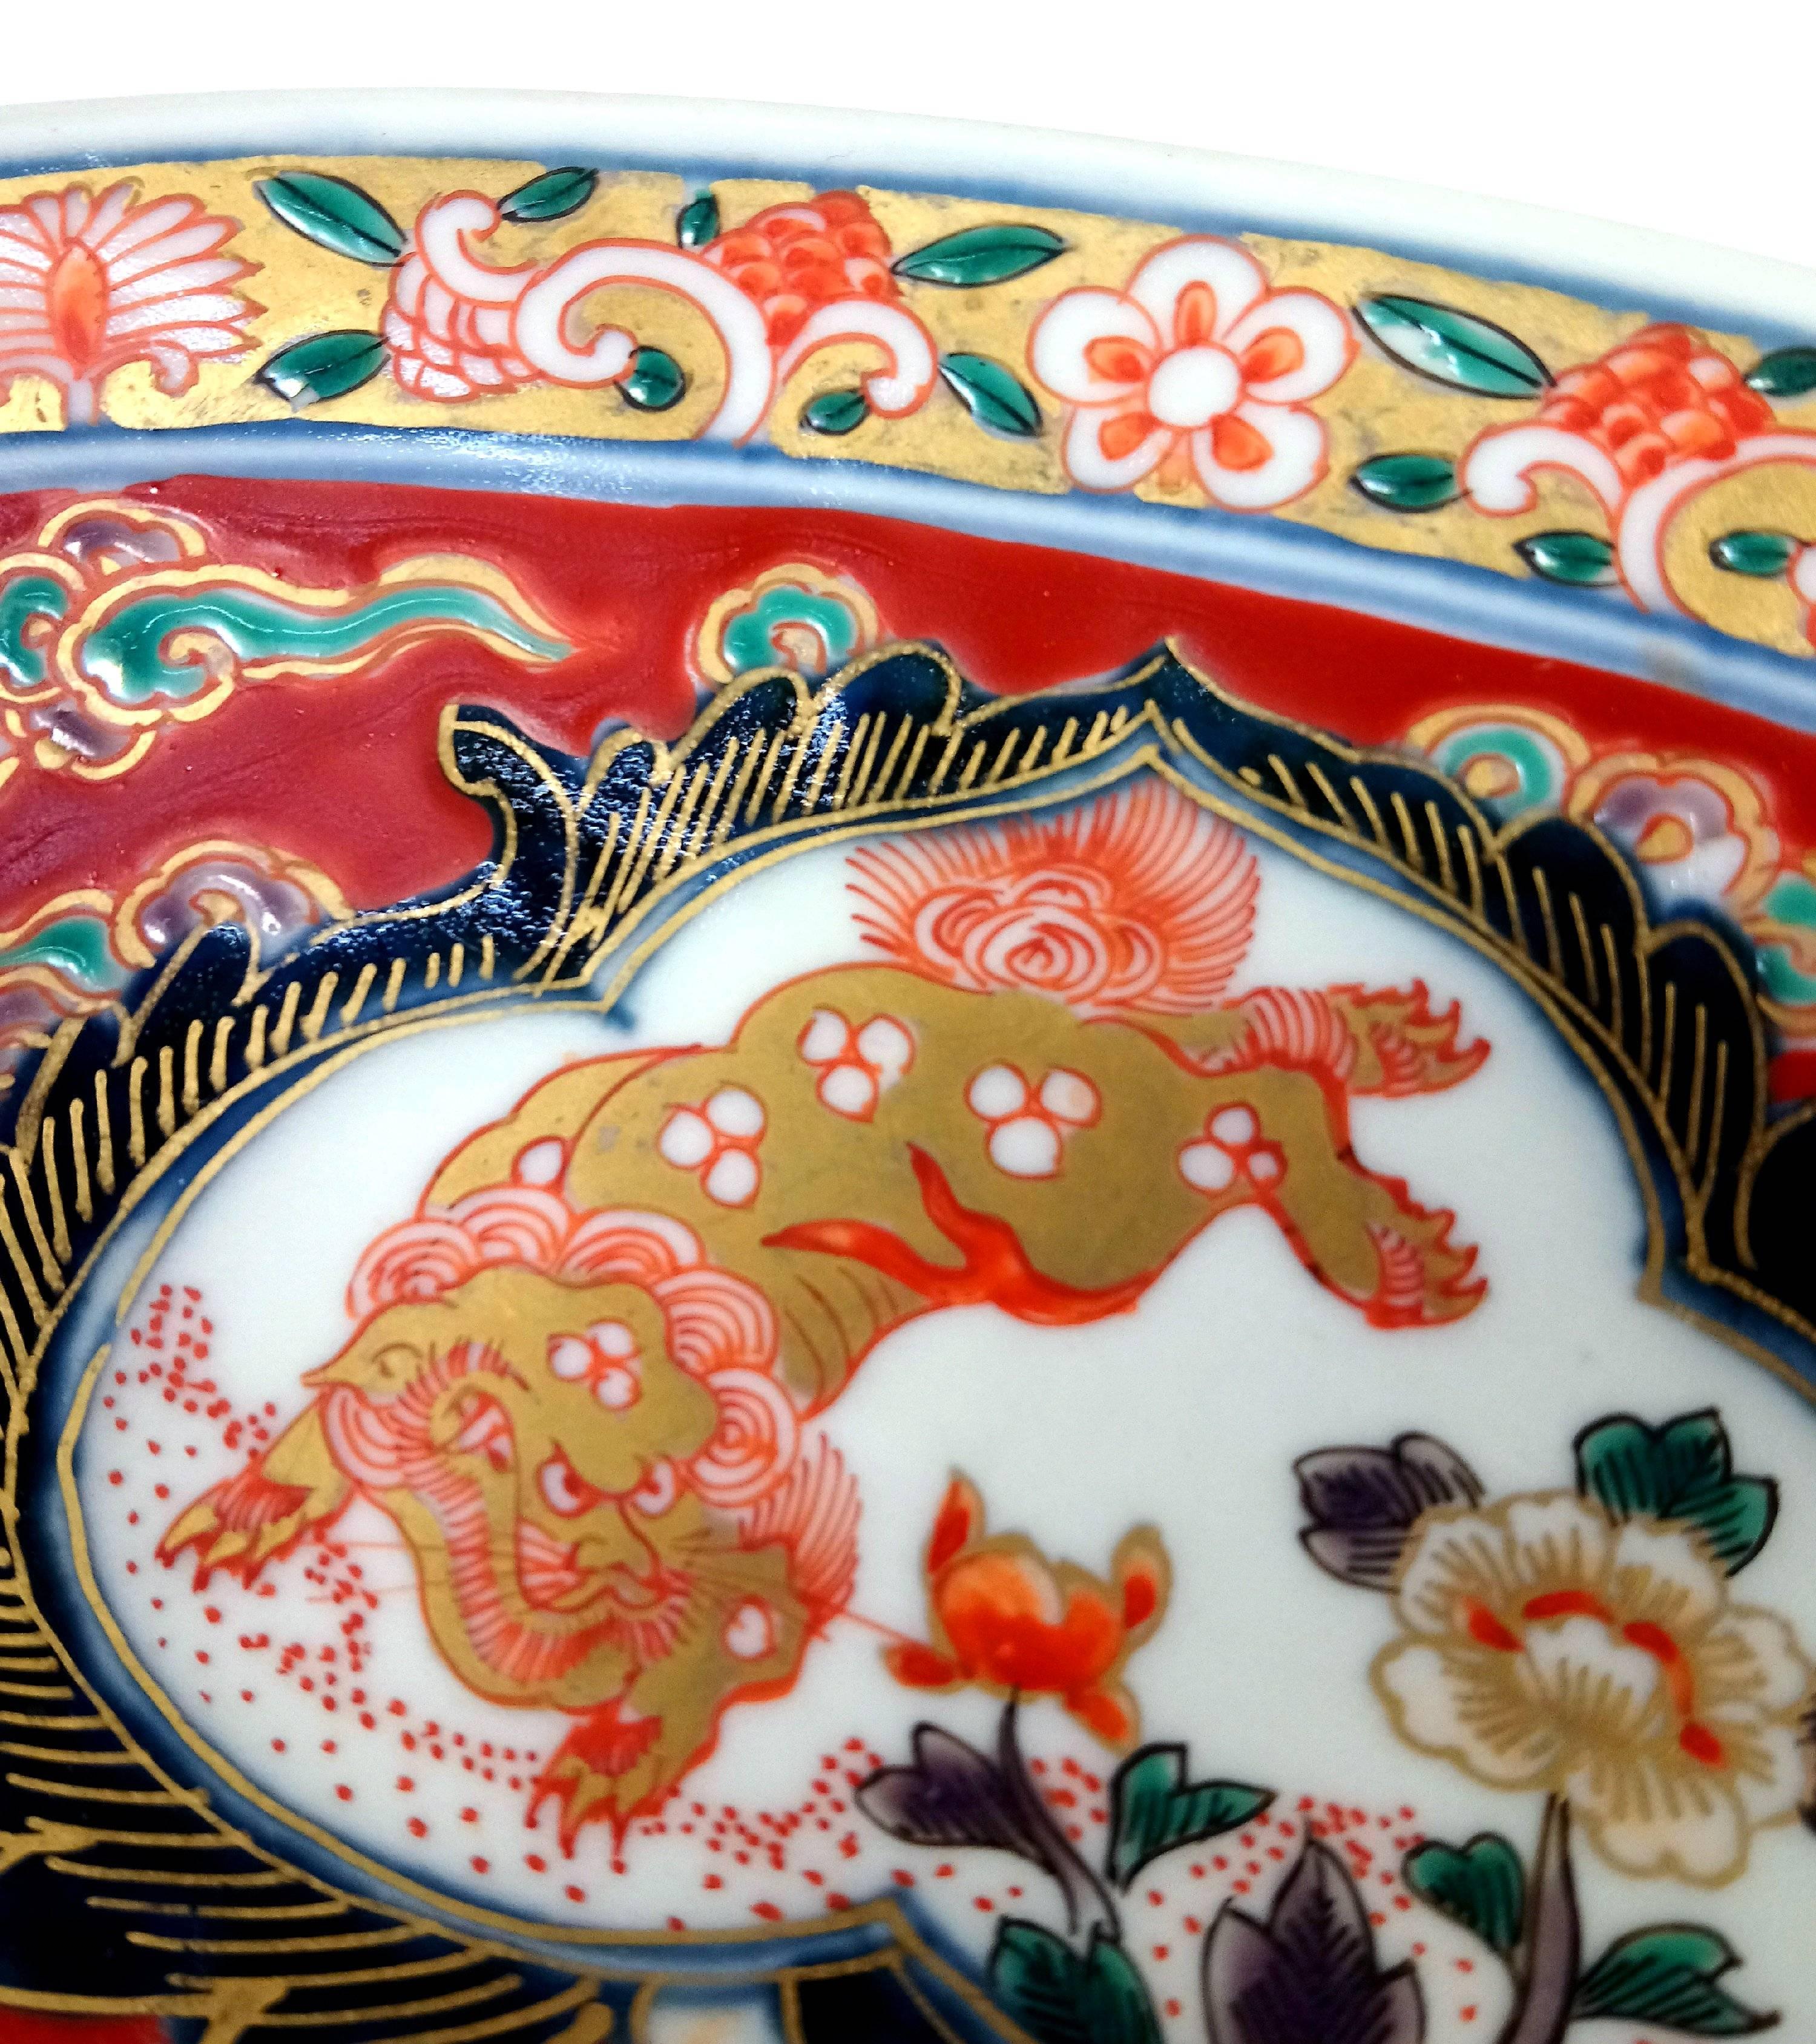 Hand-Painted 19th Century Japanese Imari Pottery Dish with Cranes